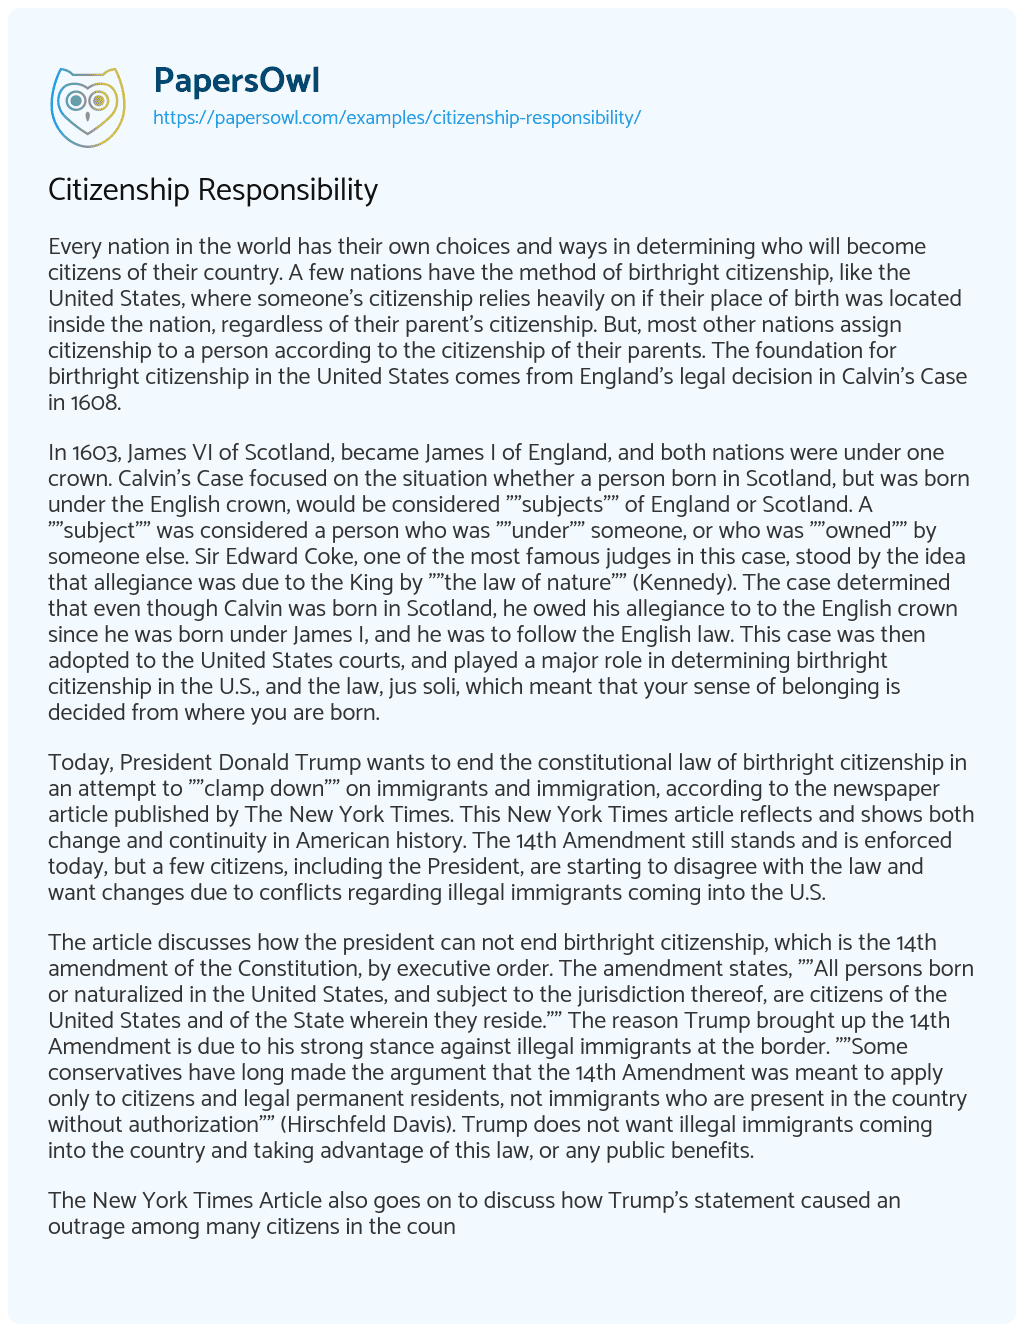 Essay on Citizenship Responsibility